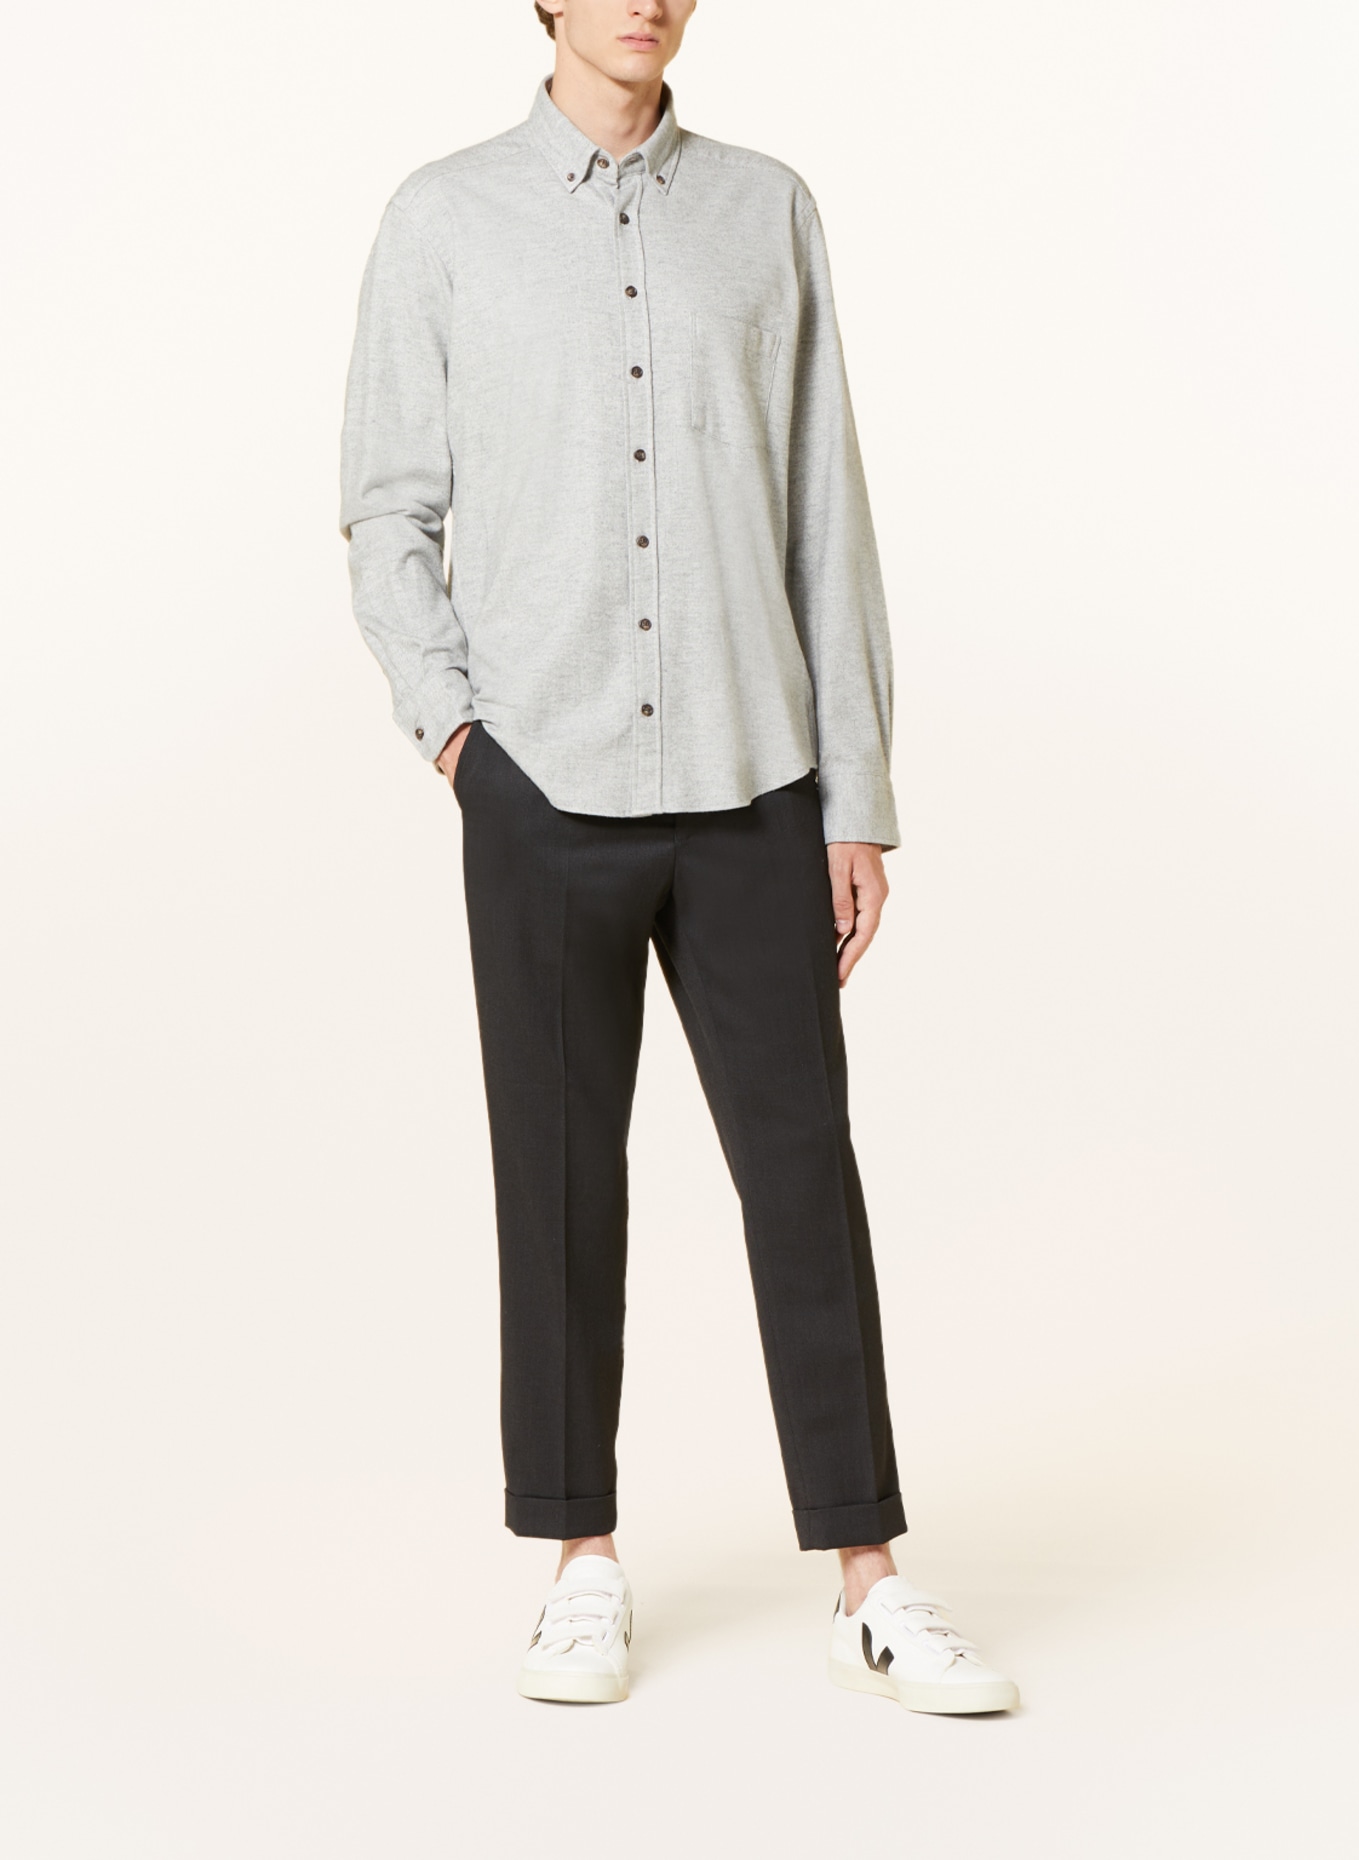 STROKESMAN'S Flannel shirt regular fit, Color: LIGHT GRAY (Image 2)